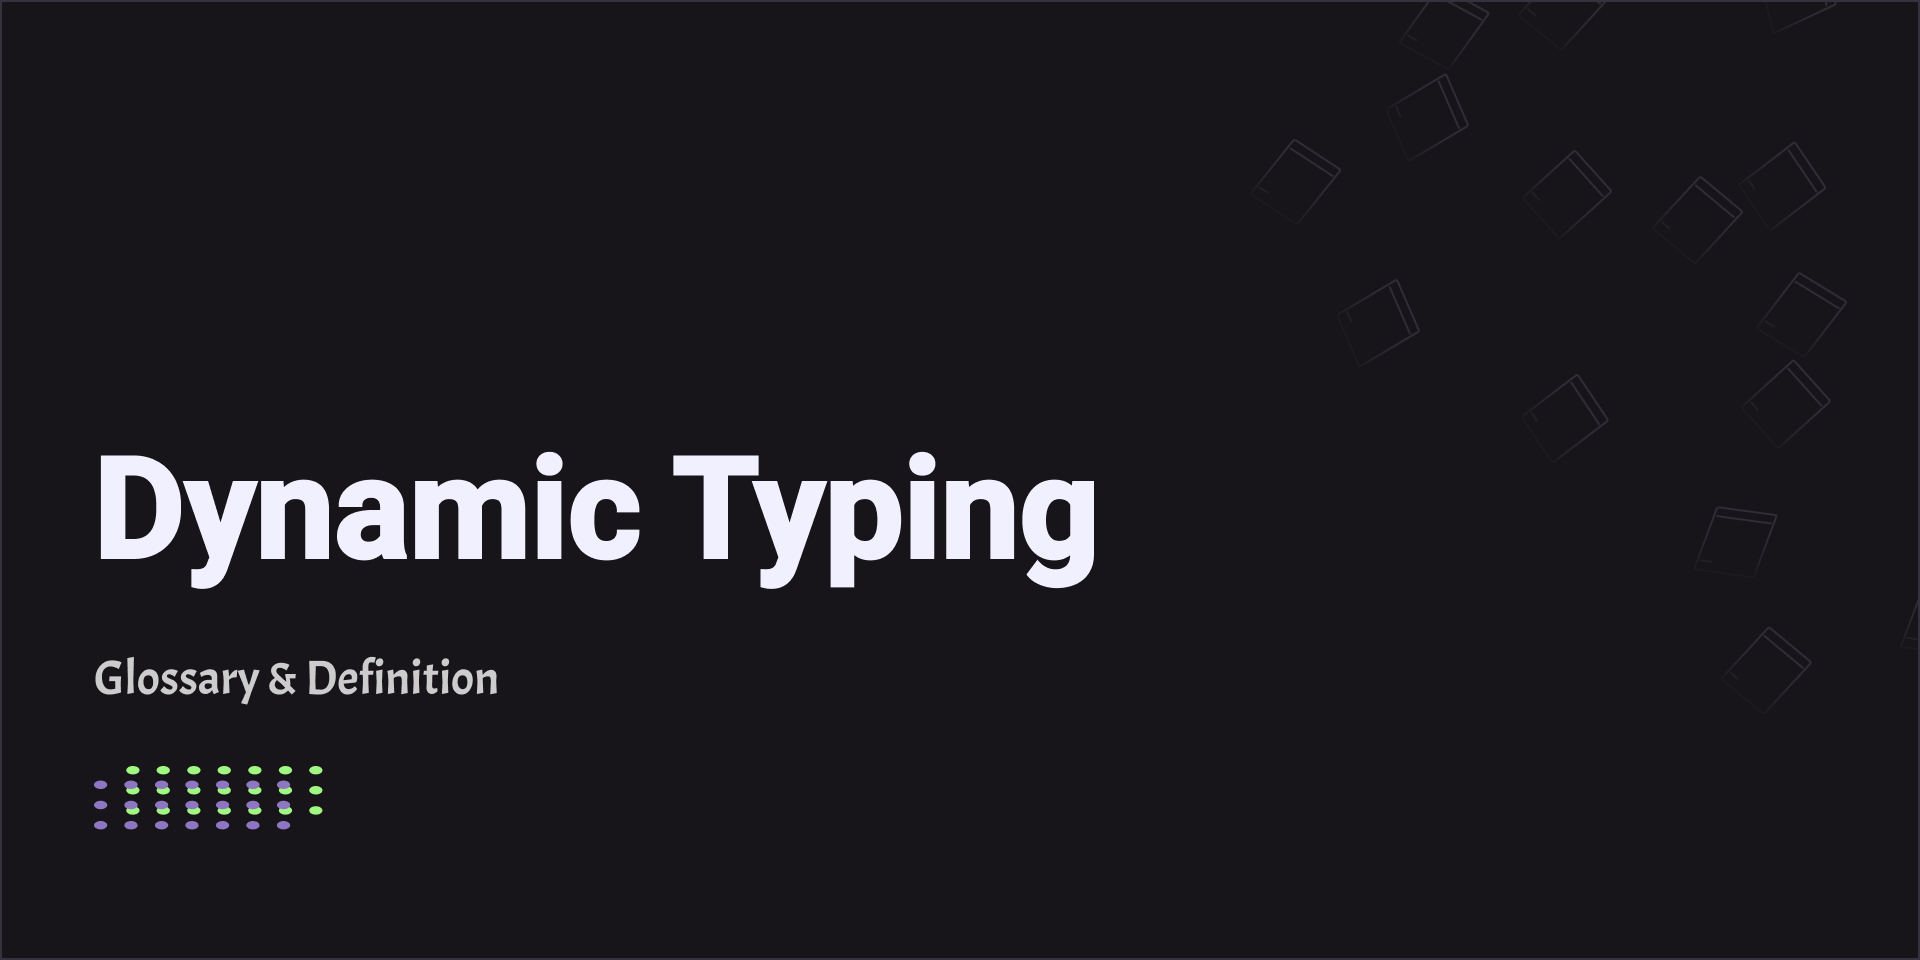 Dynamic Typing